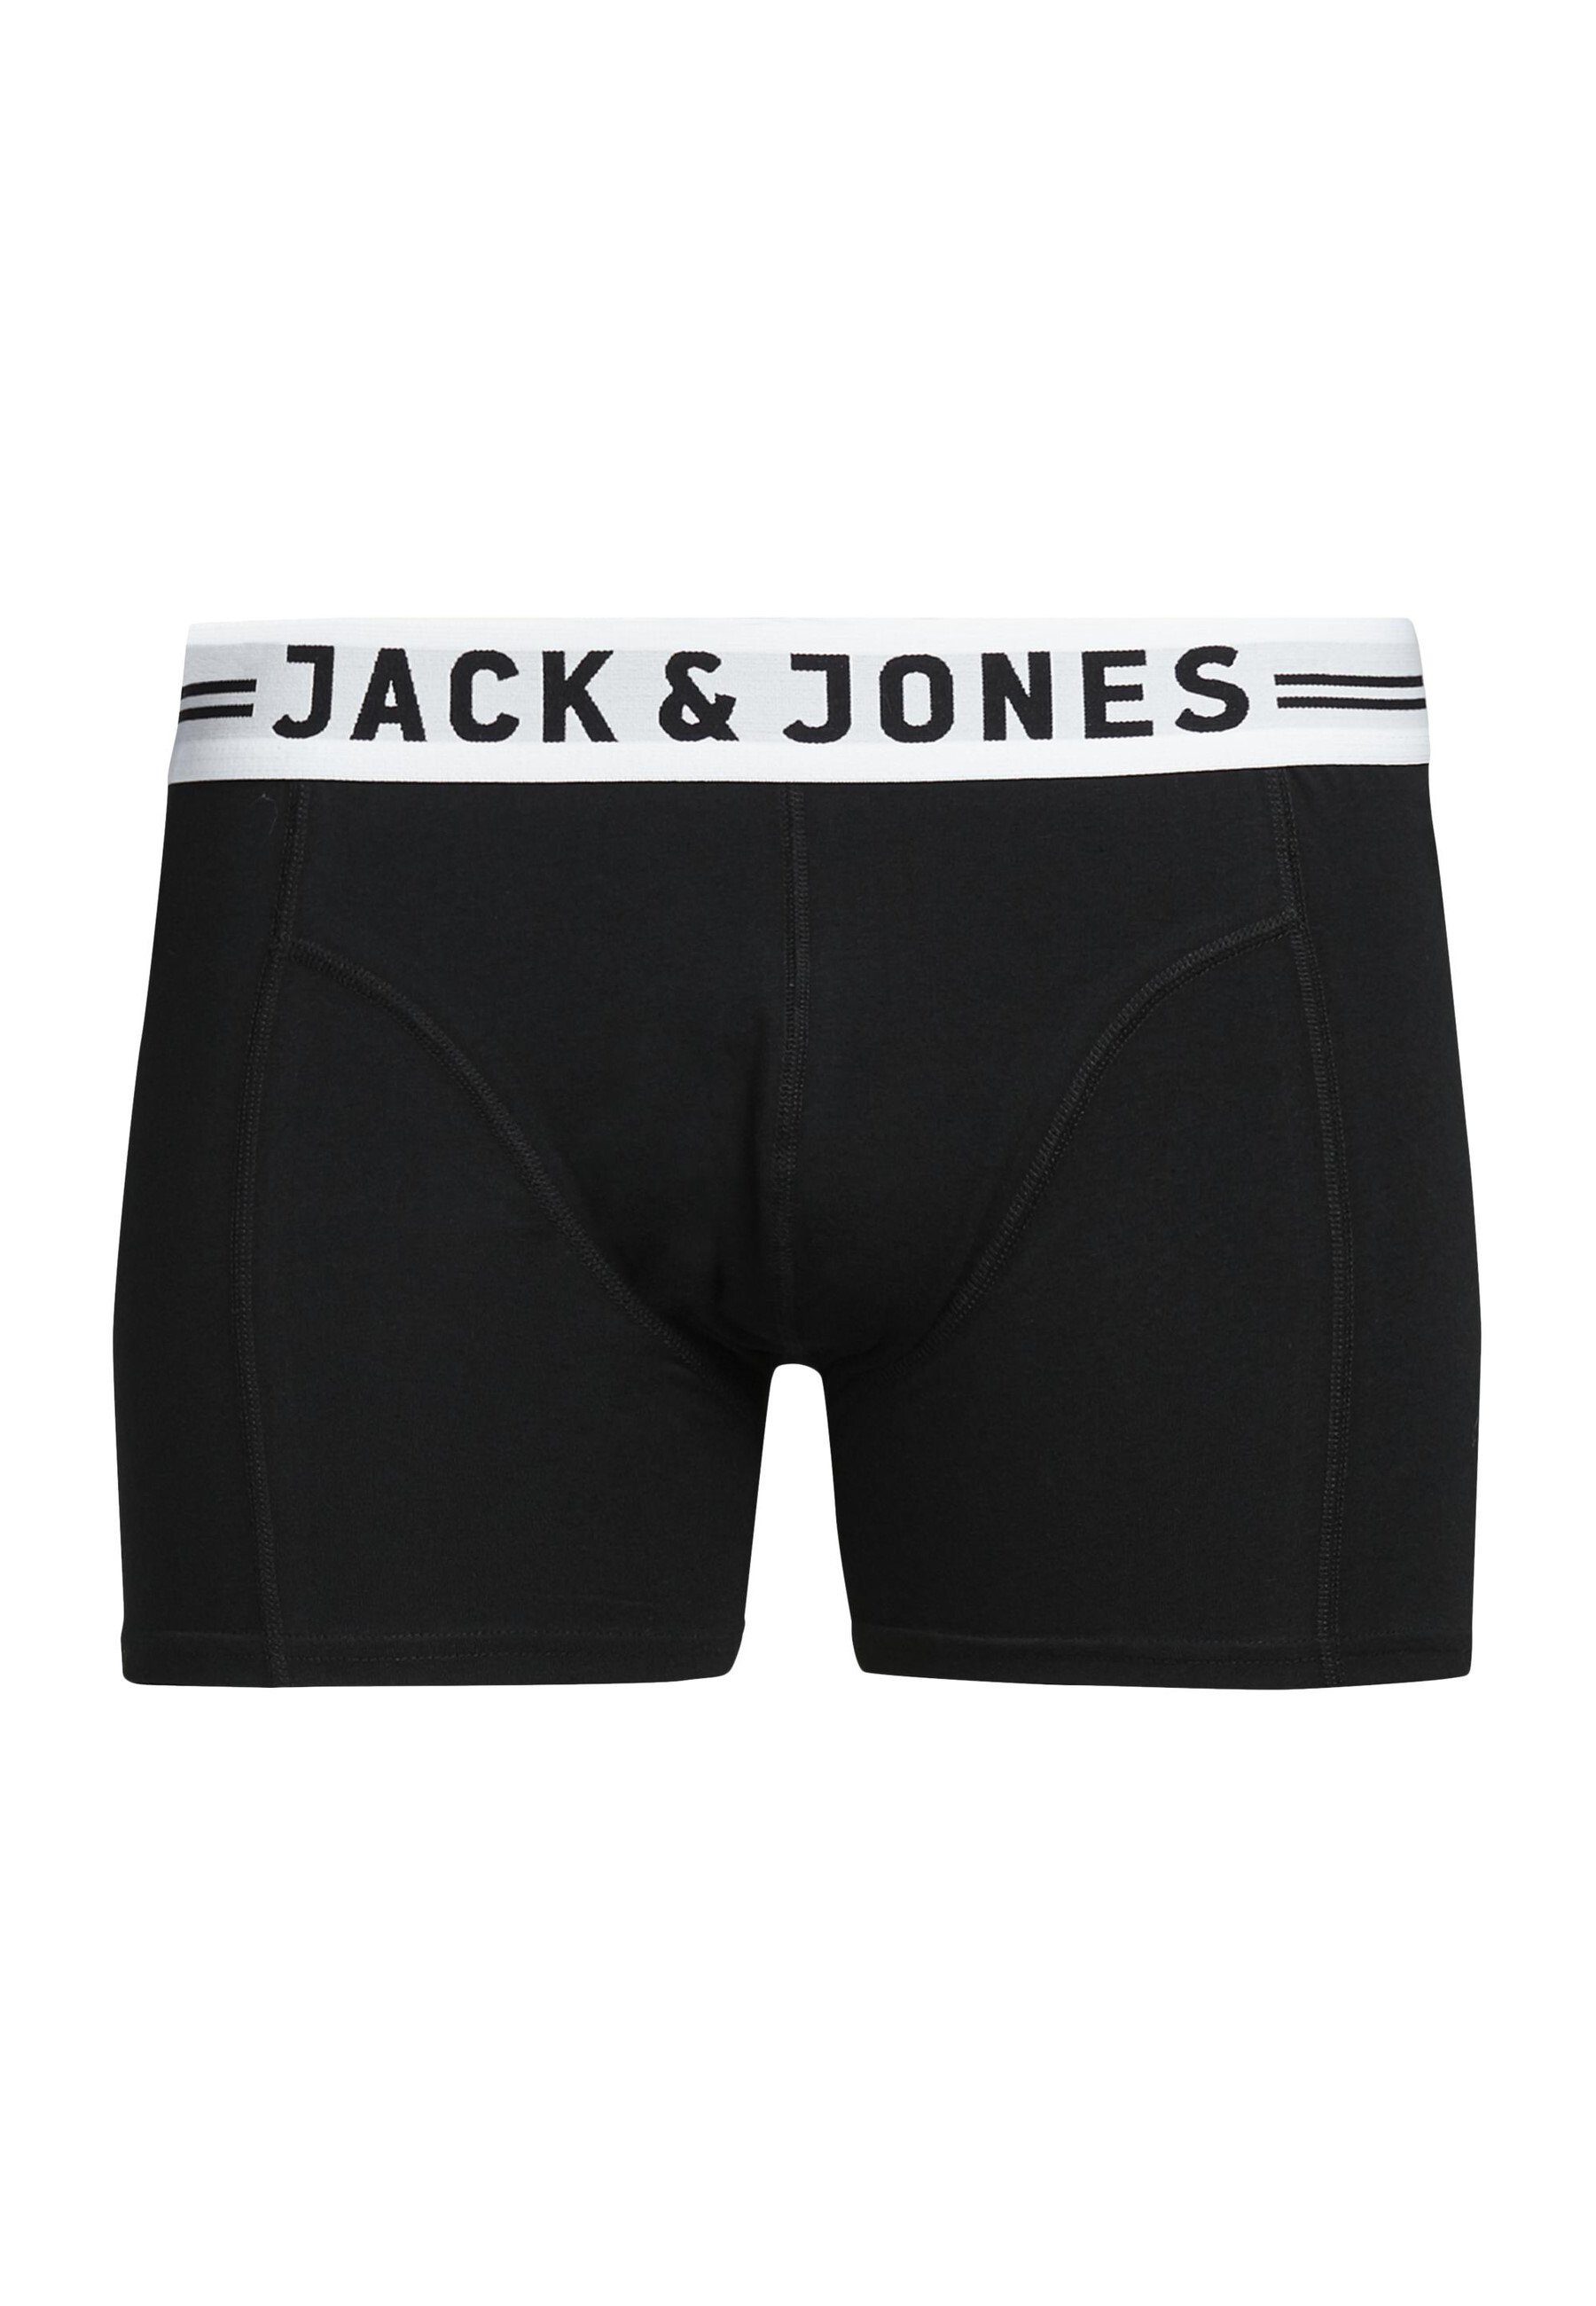 Jack & Jones Boxershorts Trunks Sense Unterhose schwarz